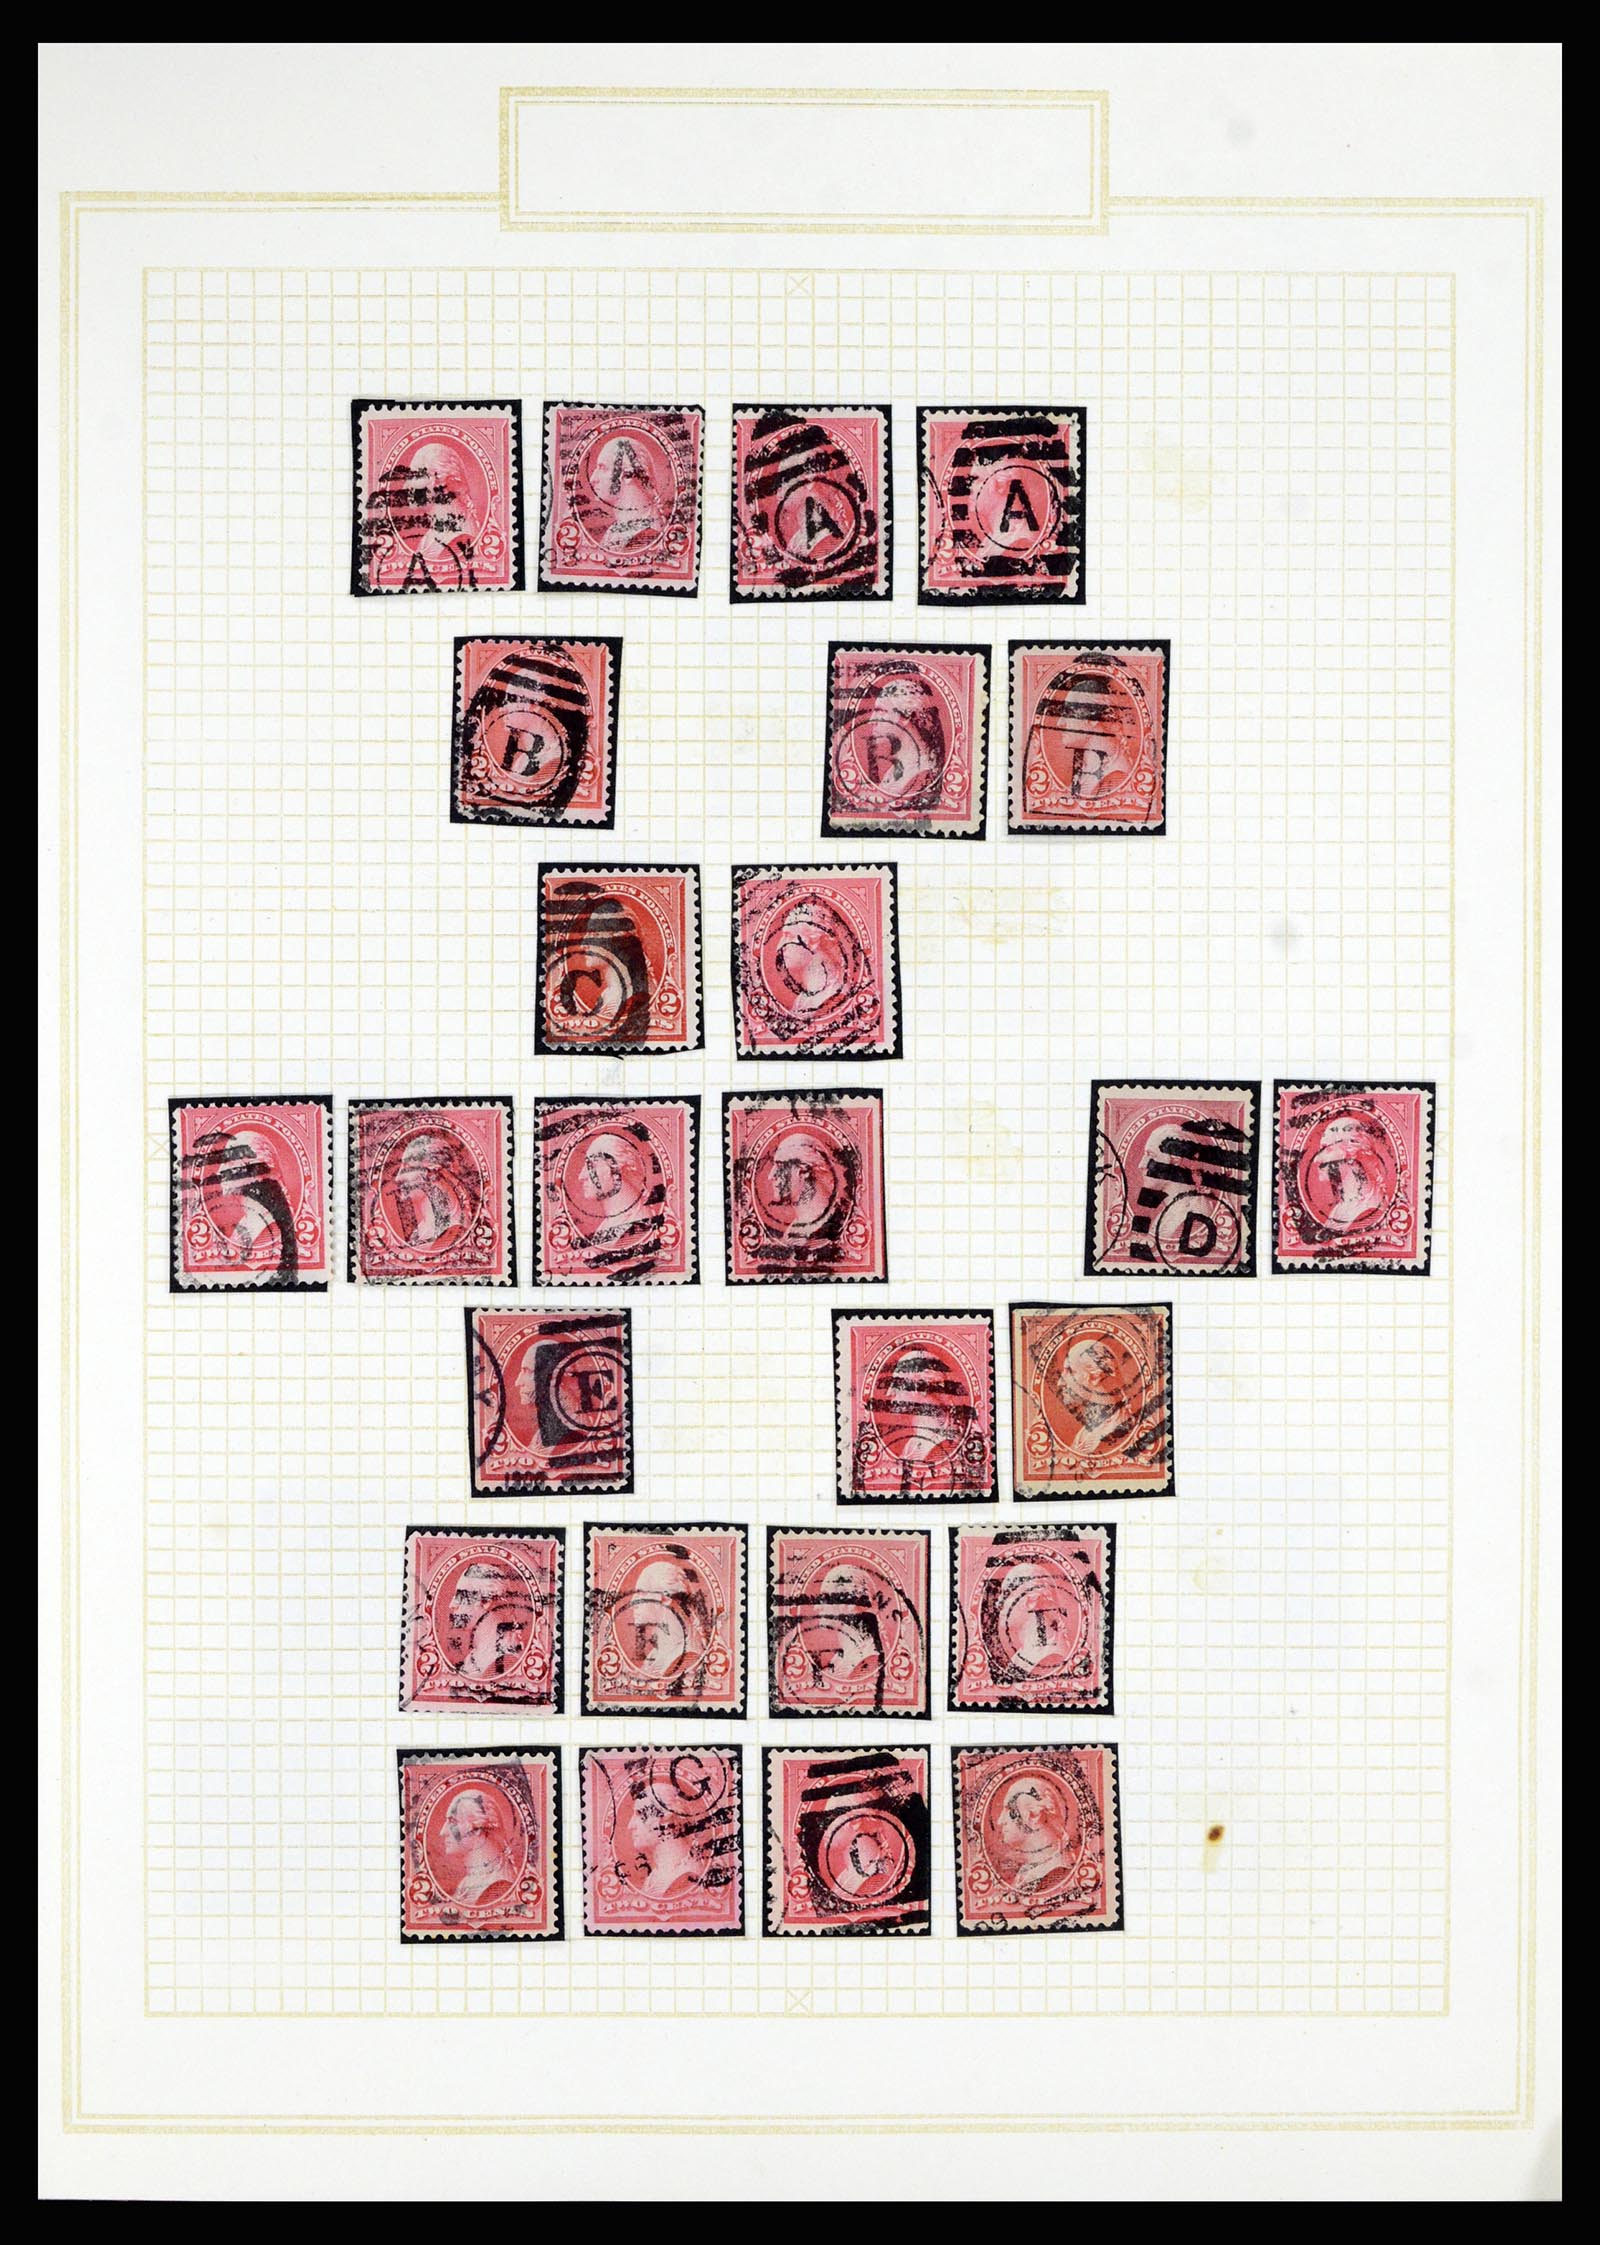 36866 017 - Stamp collection 36866 USA sorting lot.